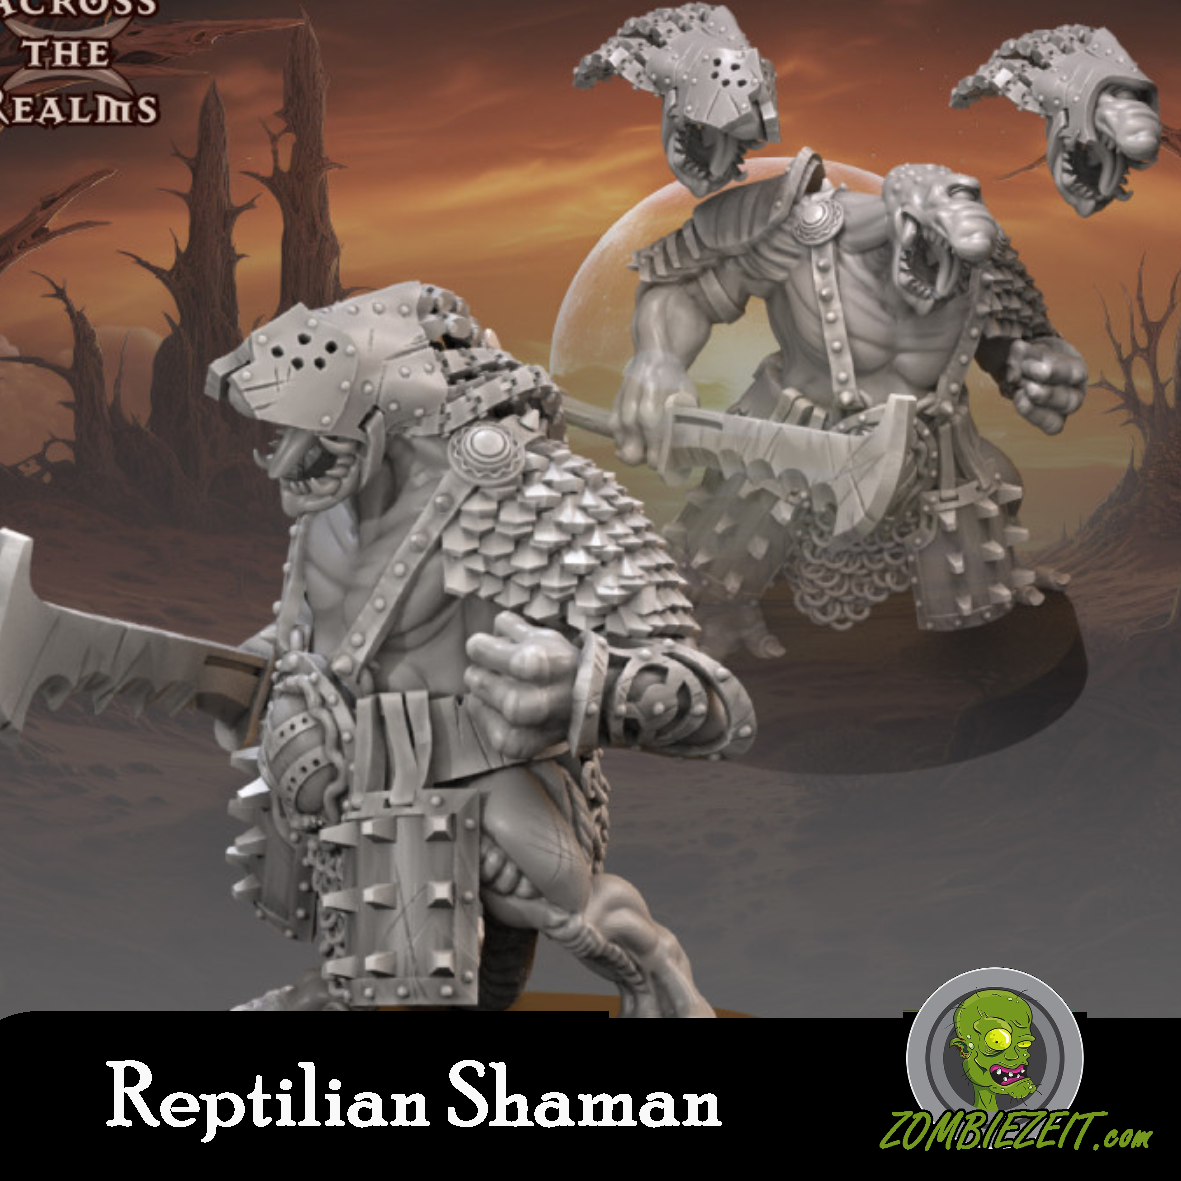 Reptilian Shaman